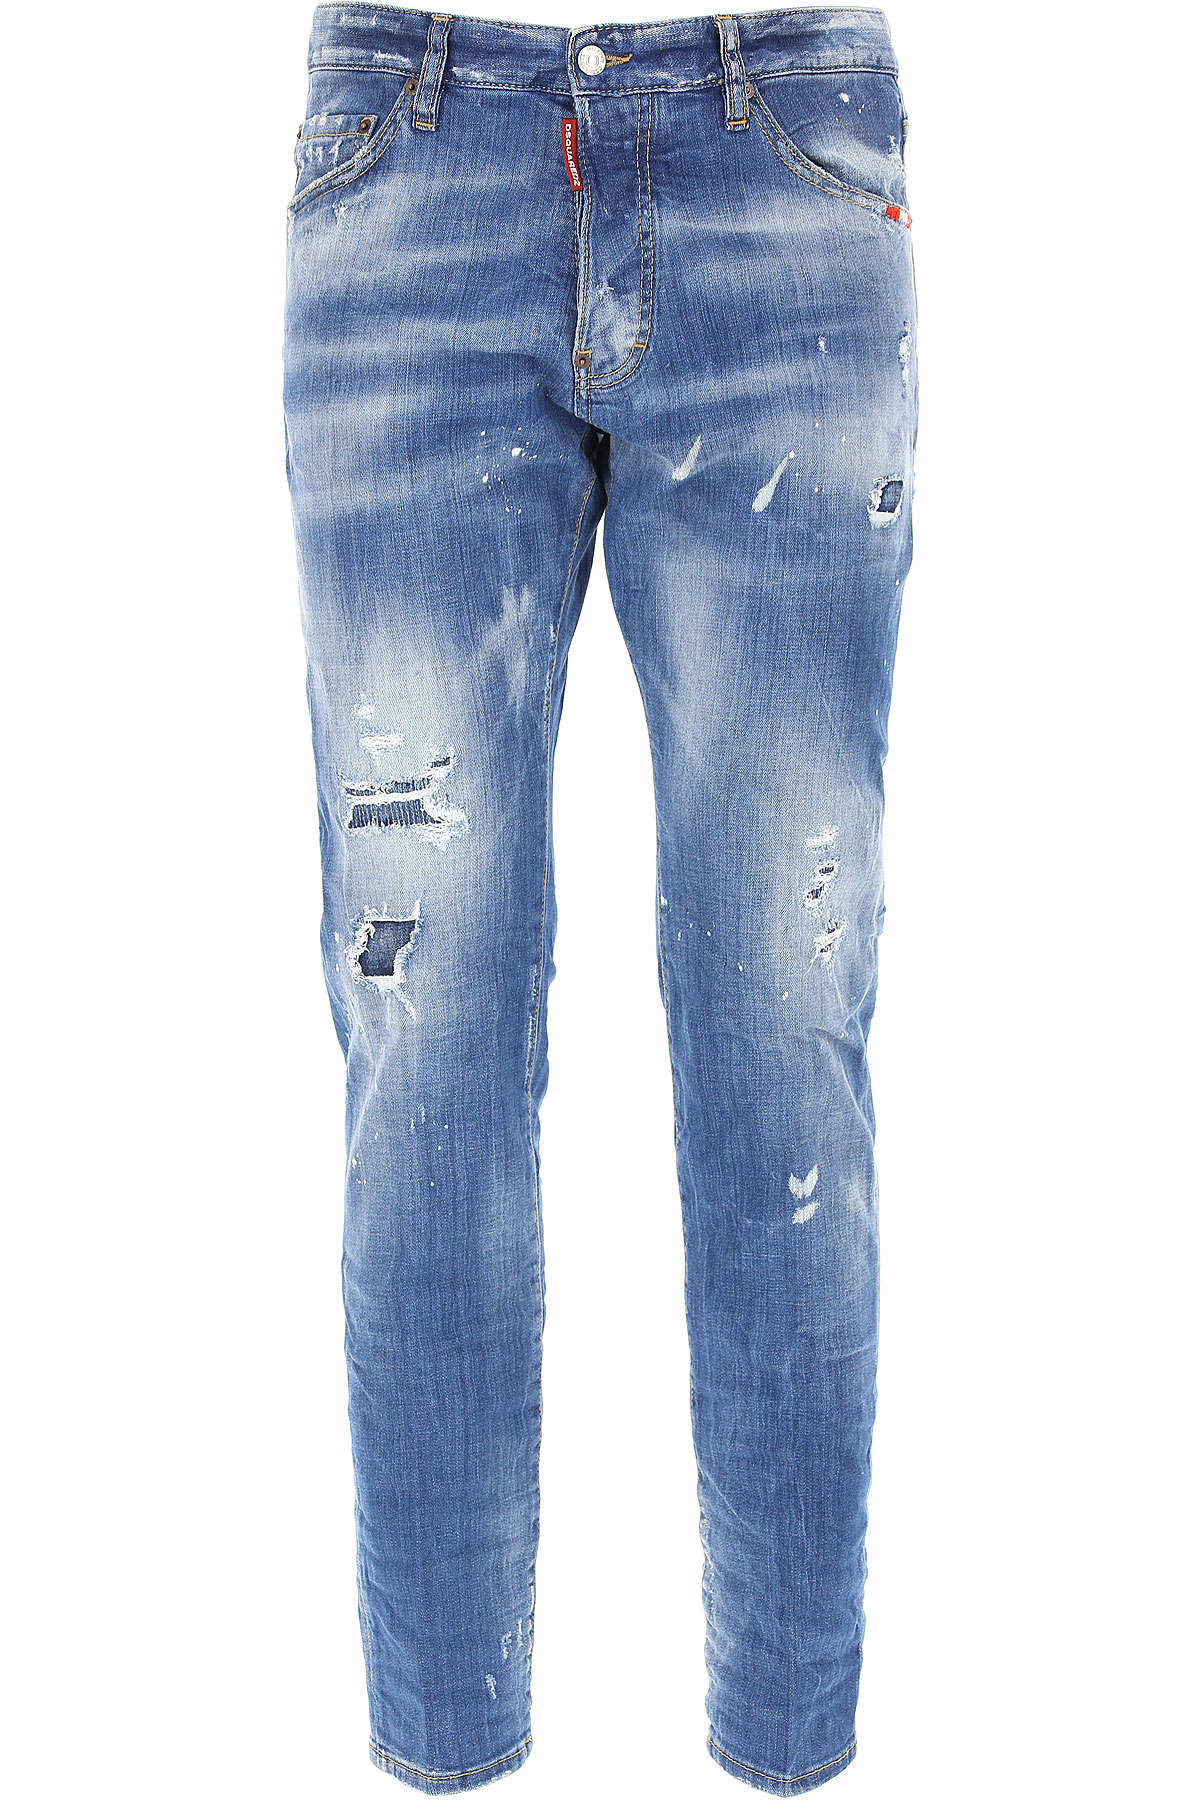 jeans dsquared uomo 2018